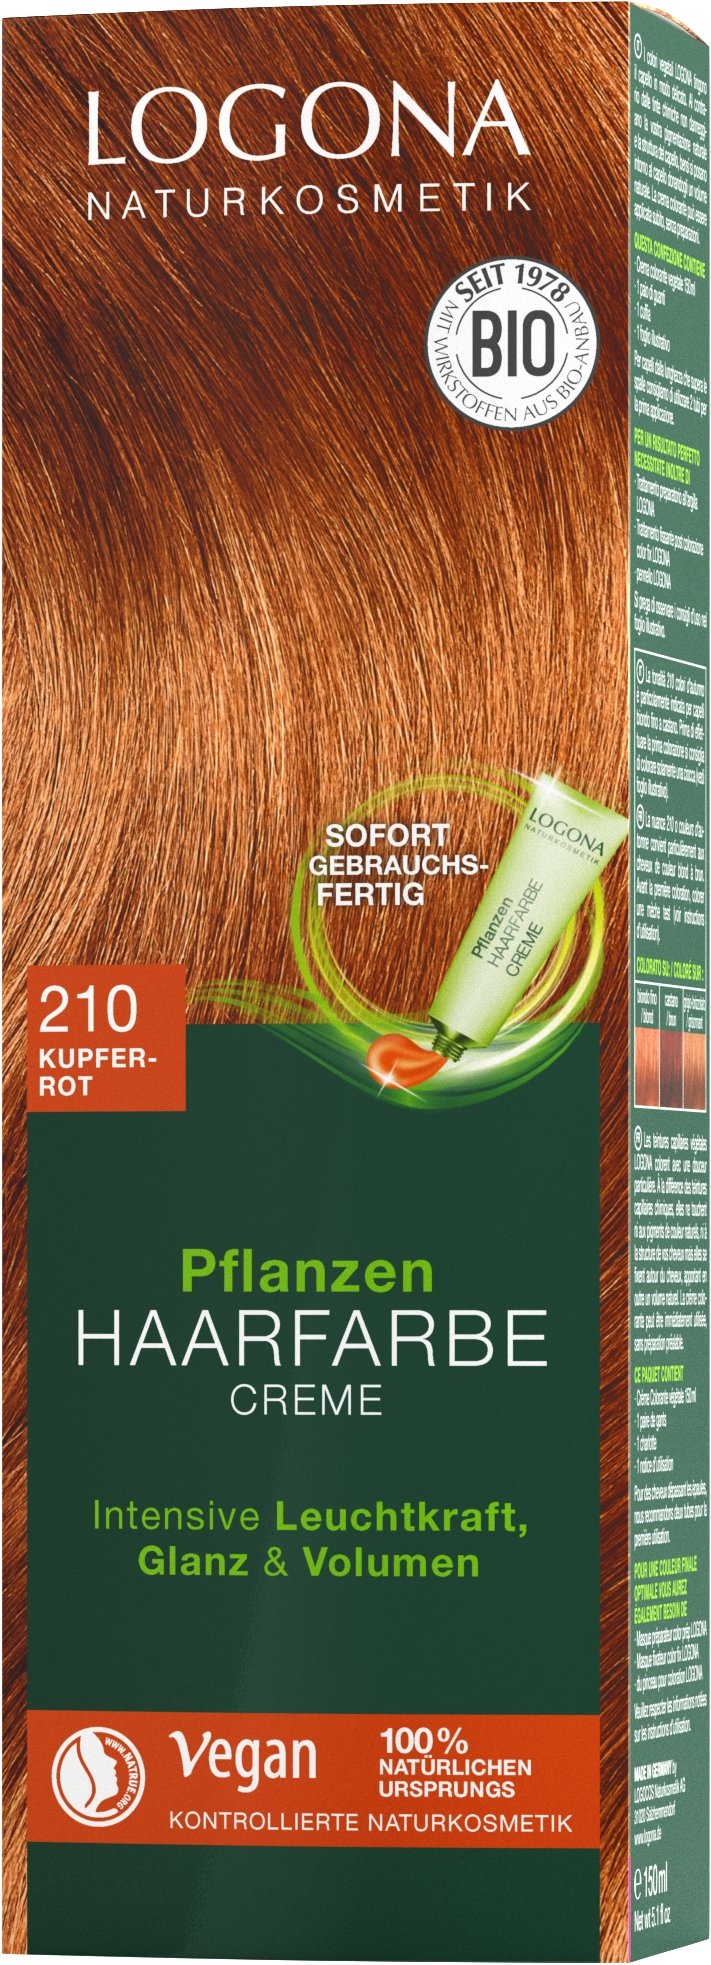 Pflanzen-Haarfarbe Creme 210 Kupferrot | Haarfarben | Logona